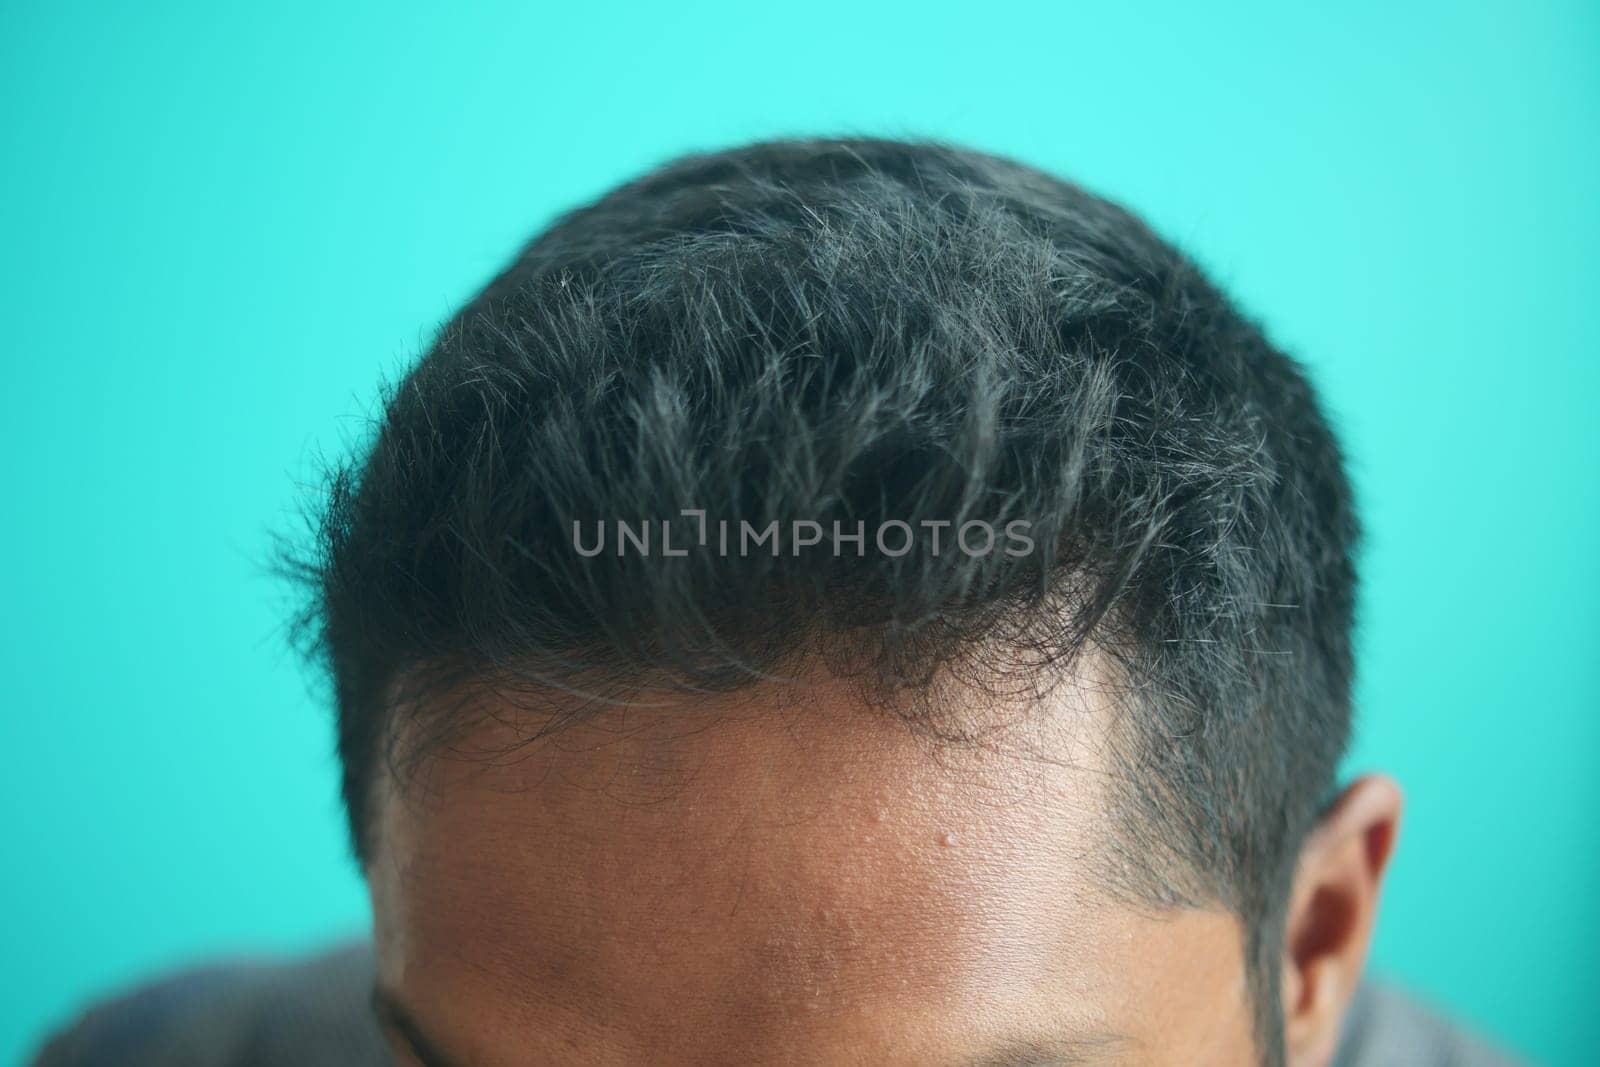 hair loss concept with man checking his hair by towfiq007